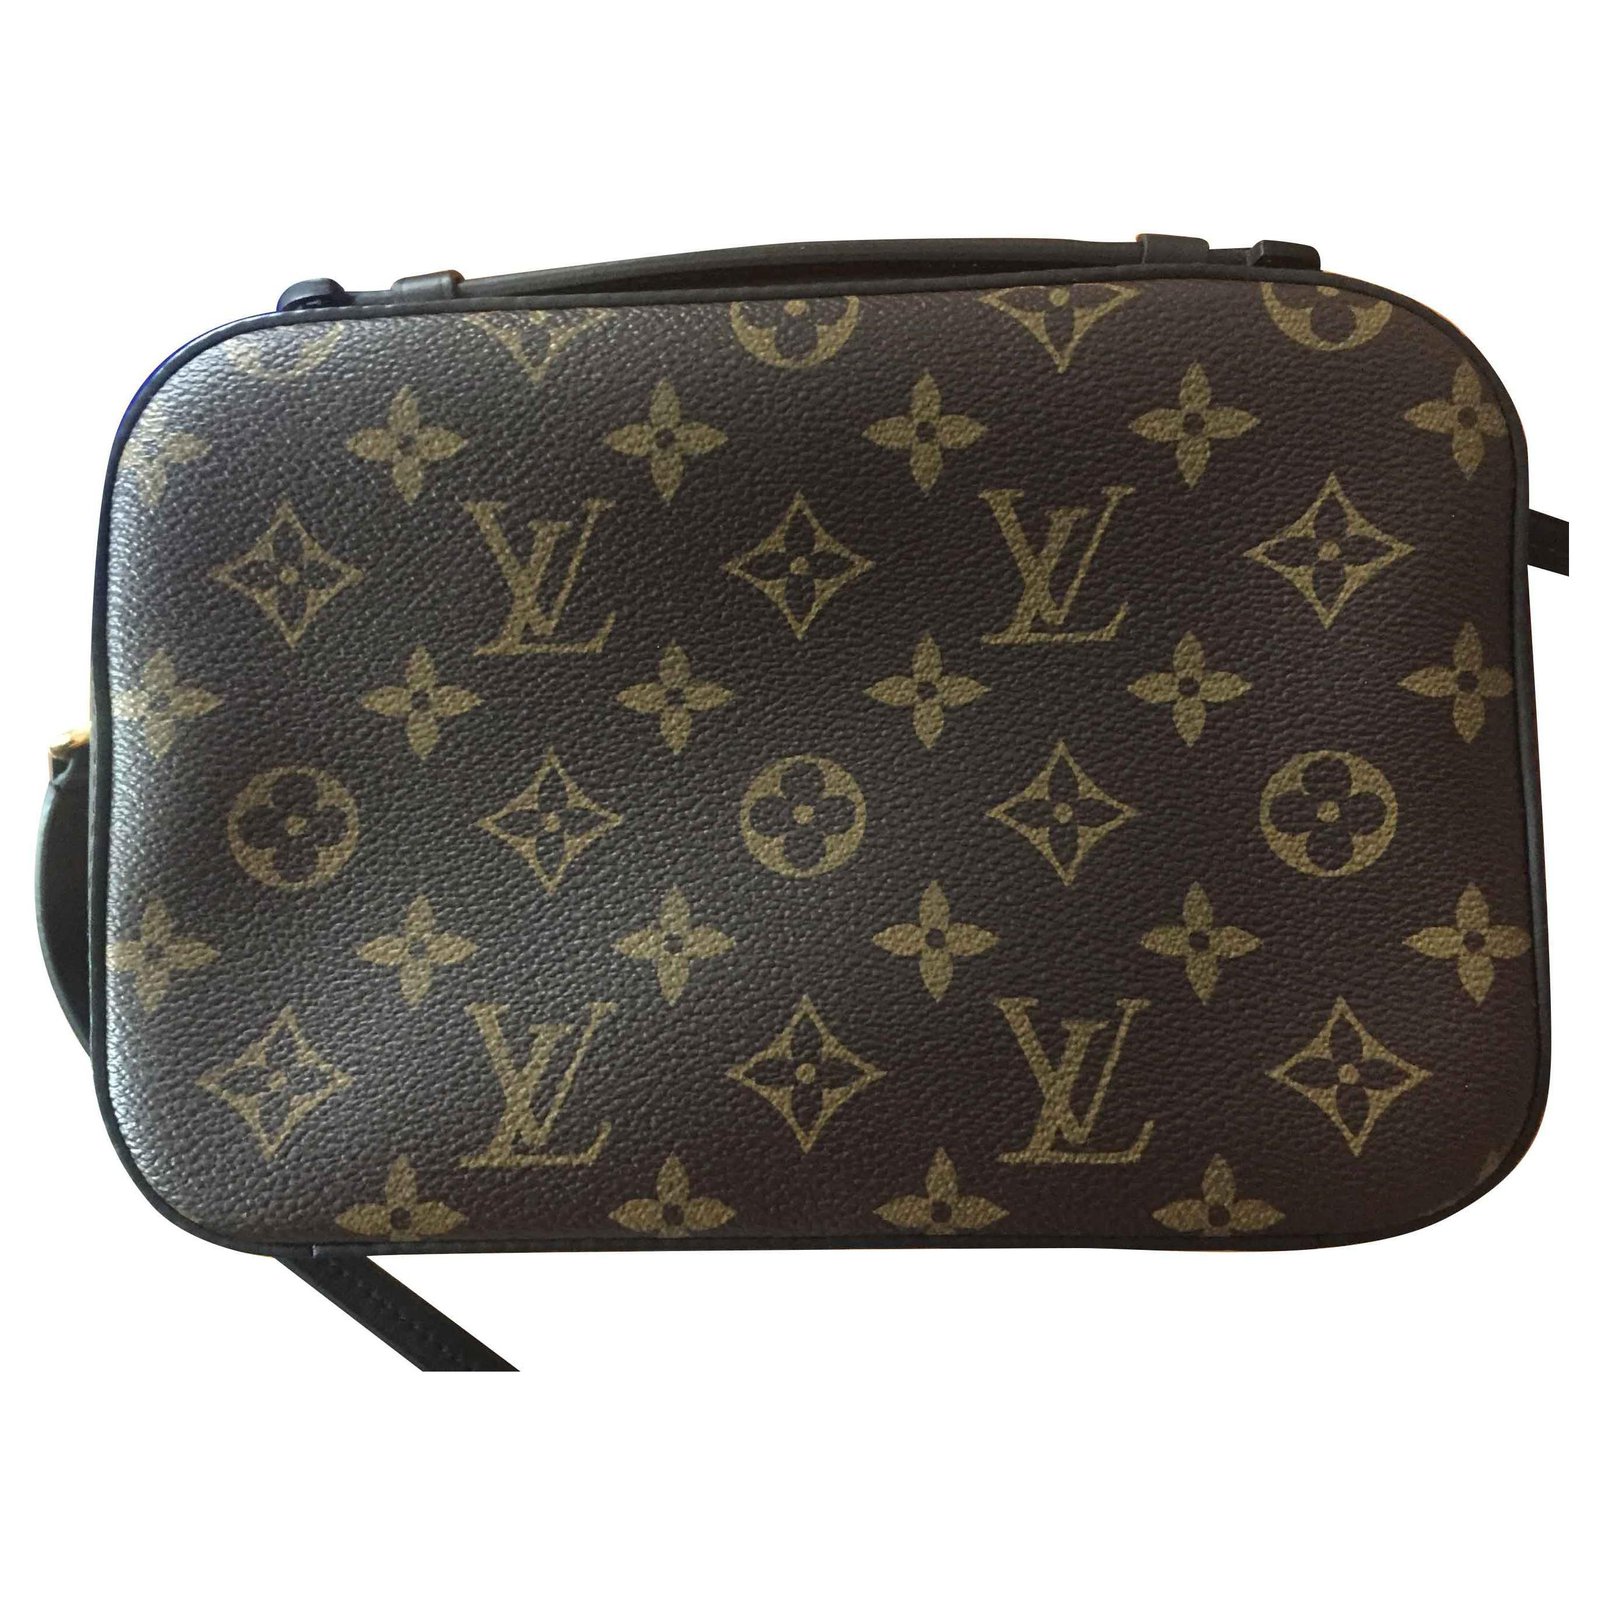 Louis Vuitton Saintonge Handbag Monogram Canvas With Leather